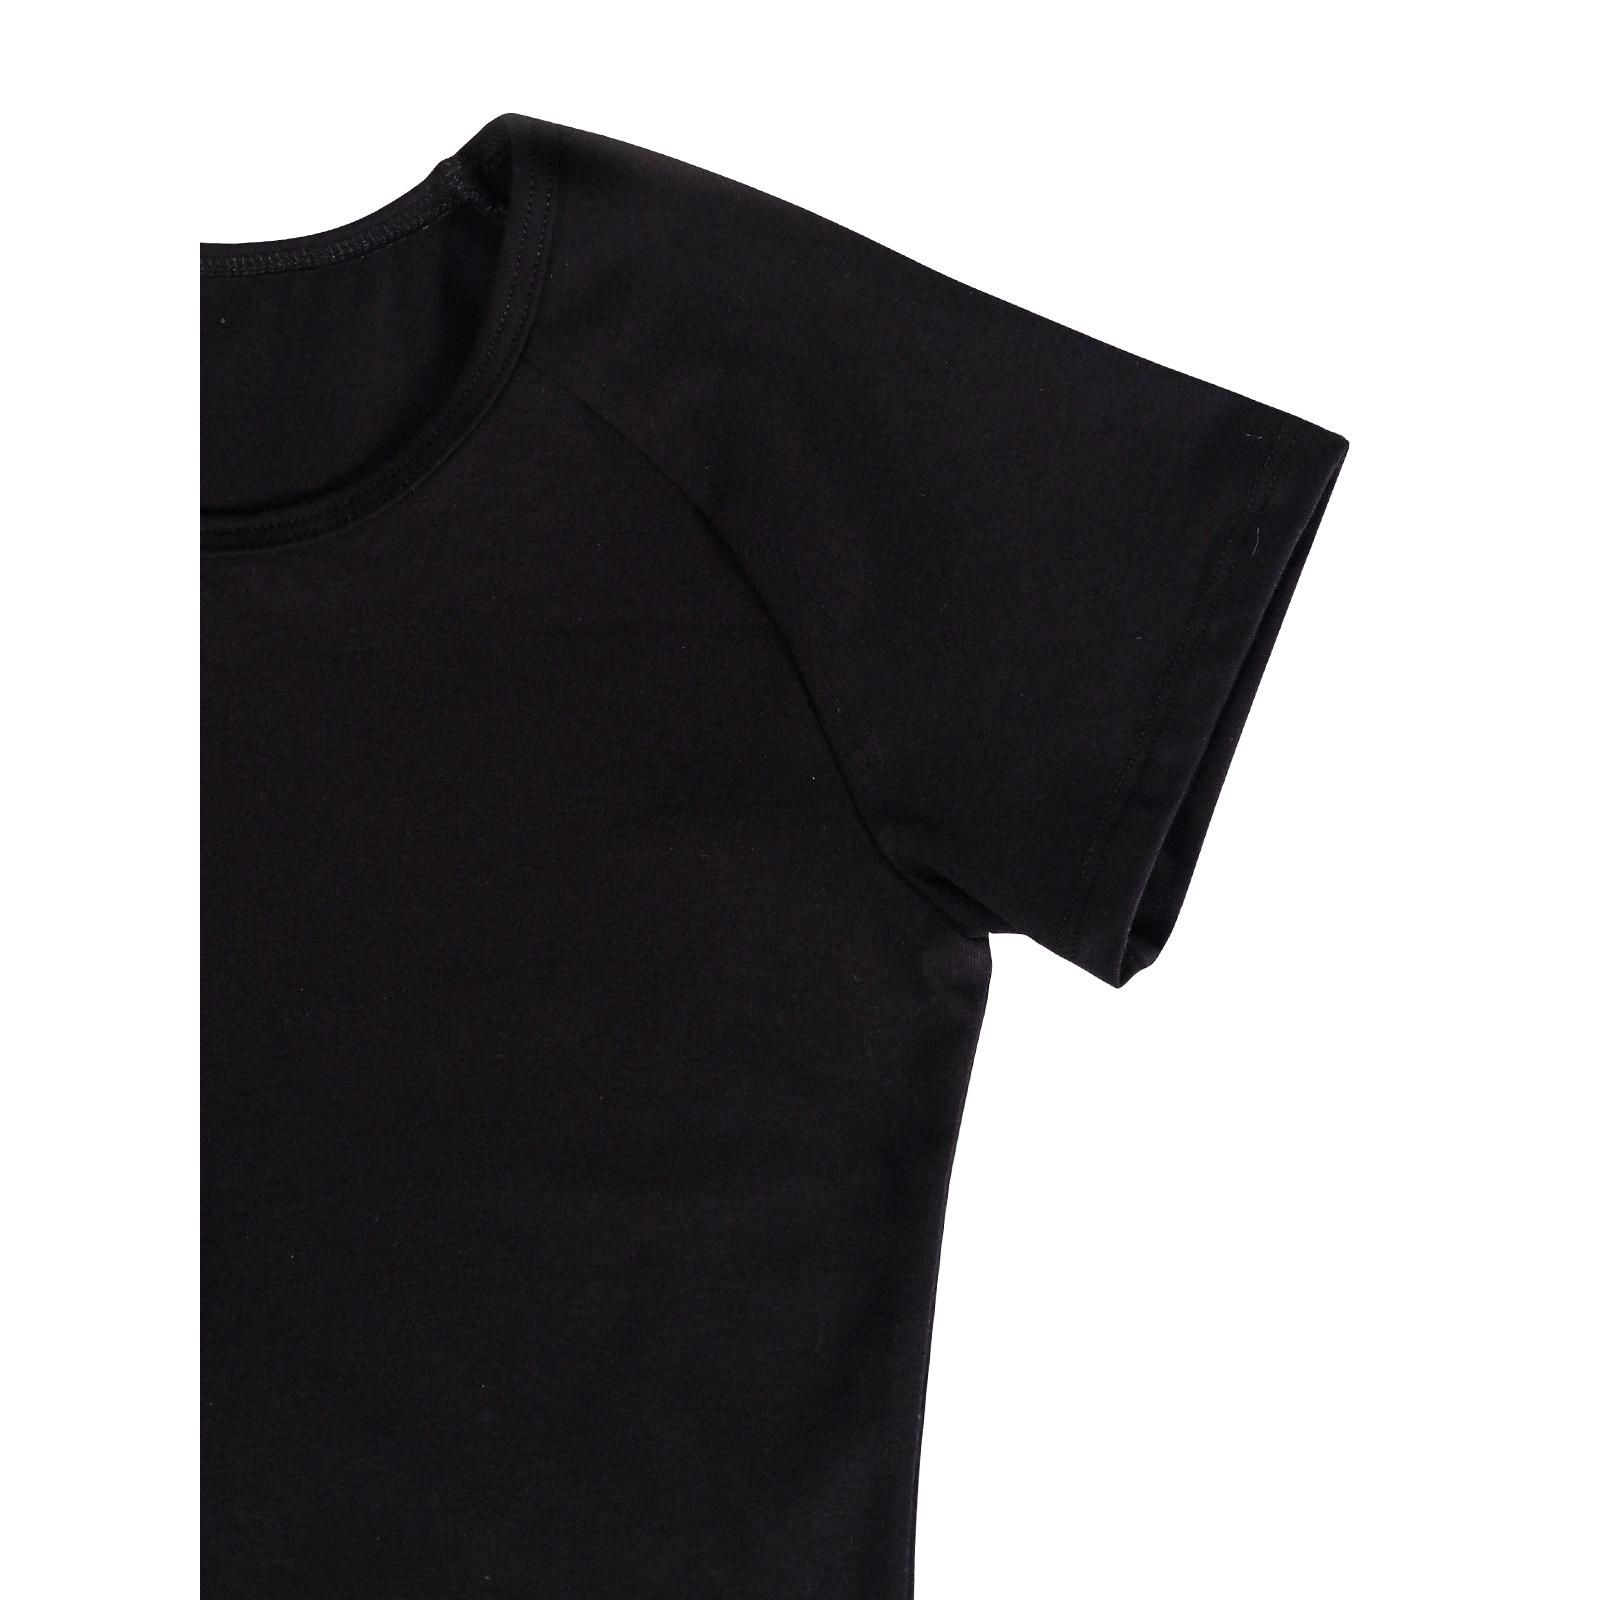 Camiseta Mangas Raglán de Algodón SOLO Negro Talla 38